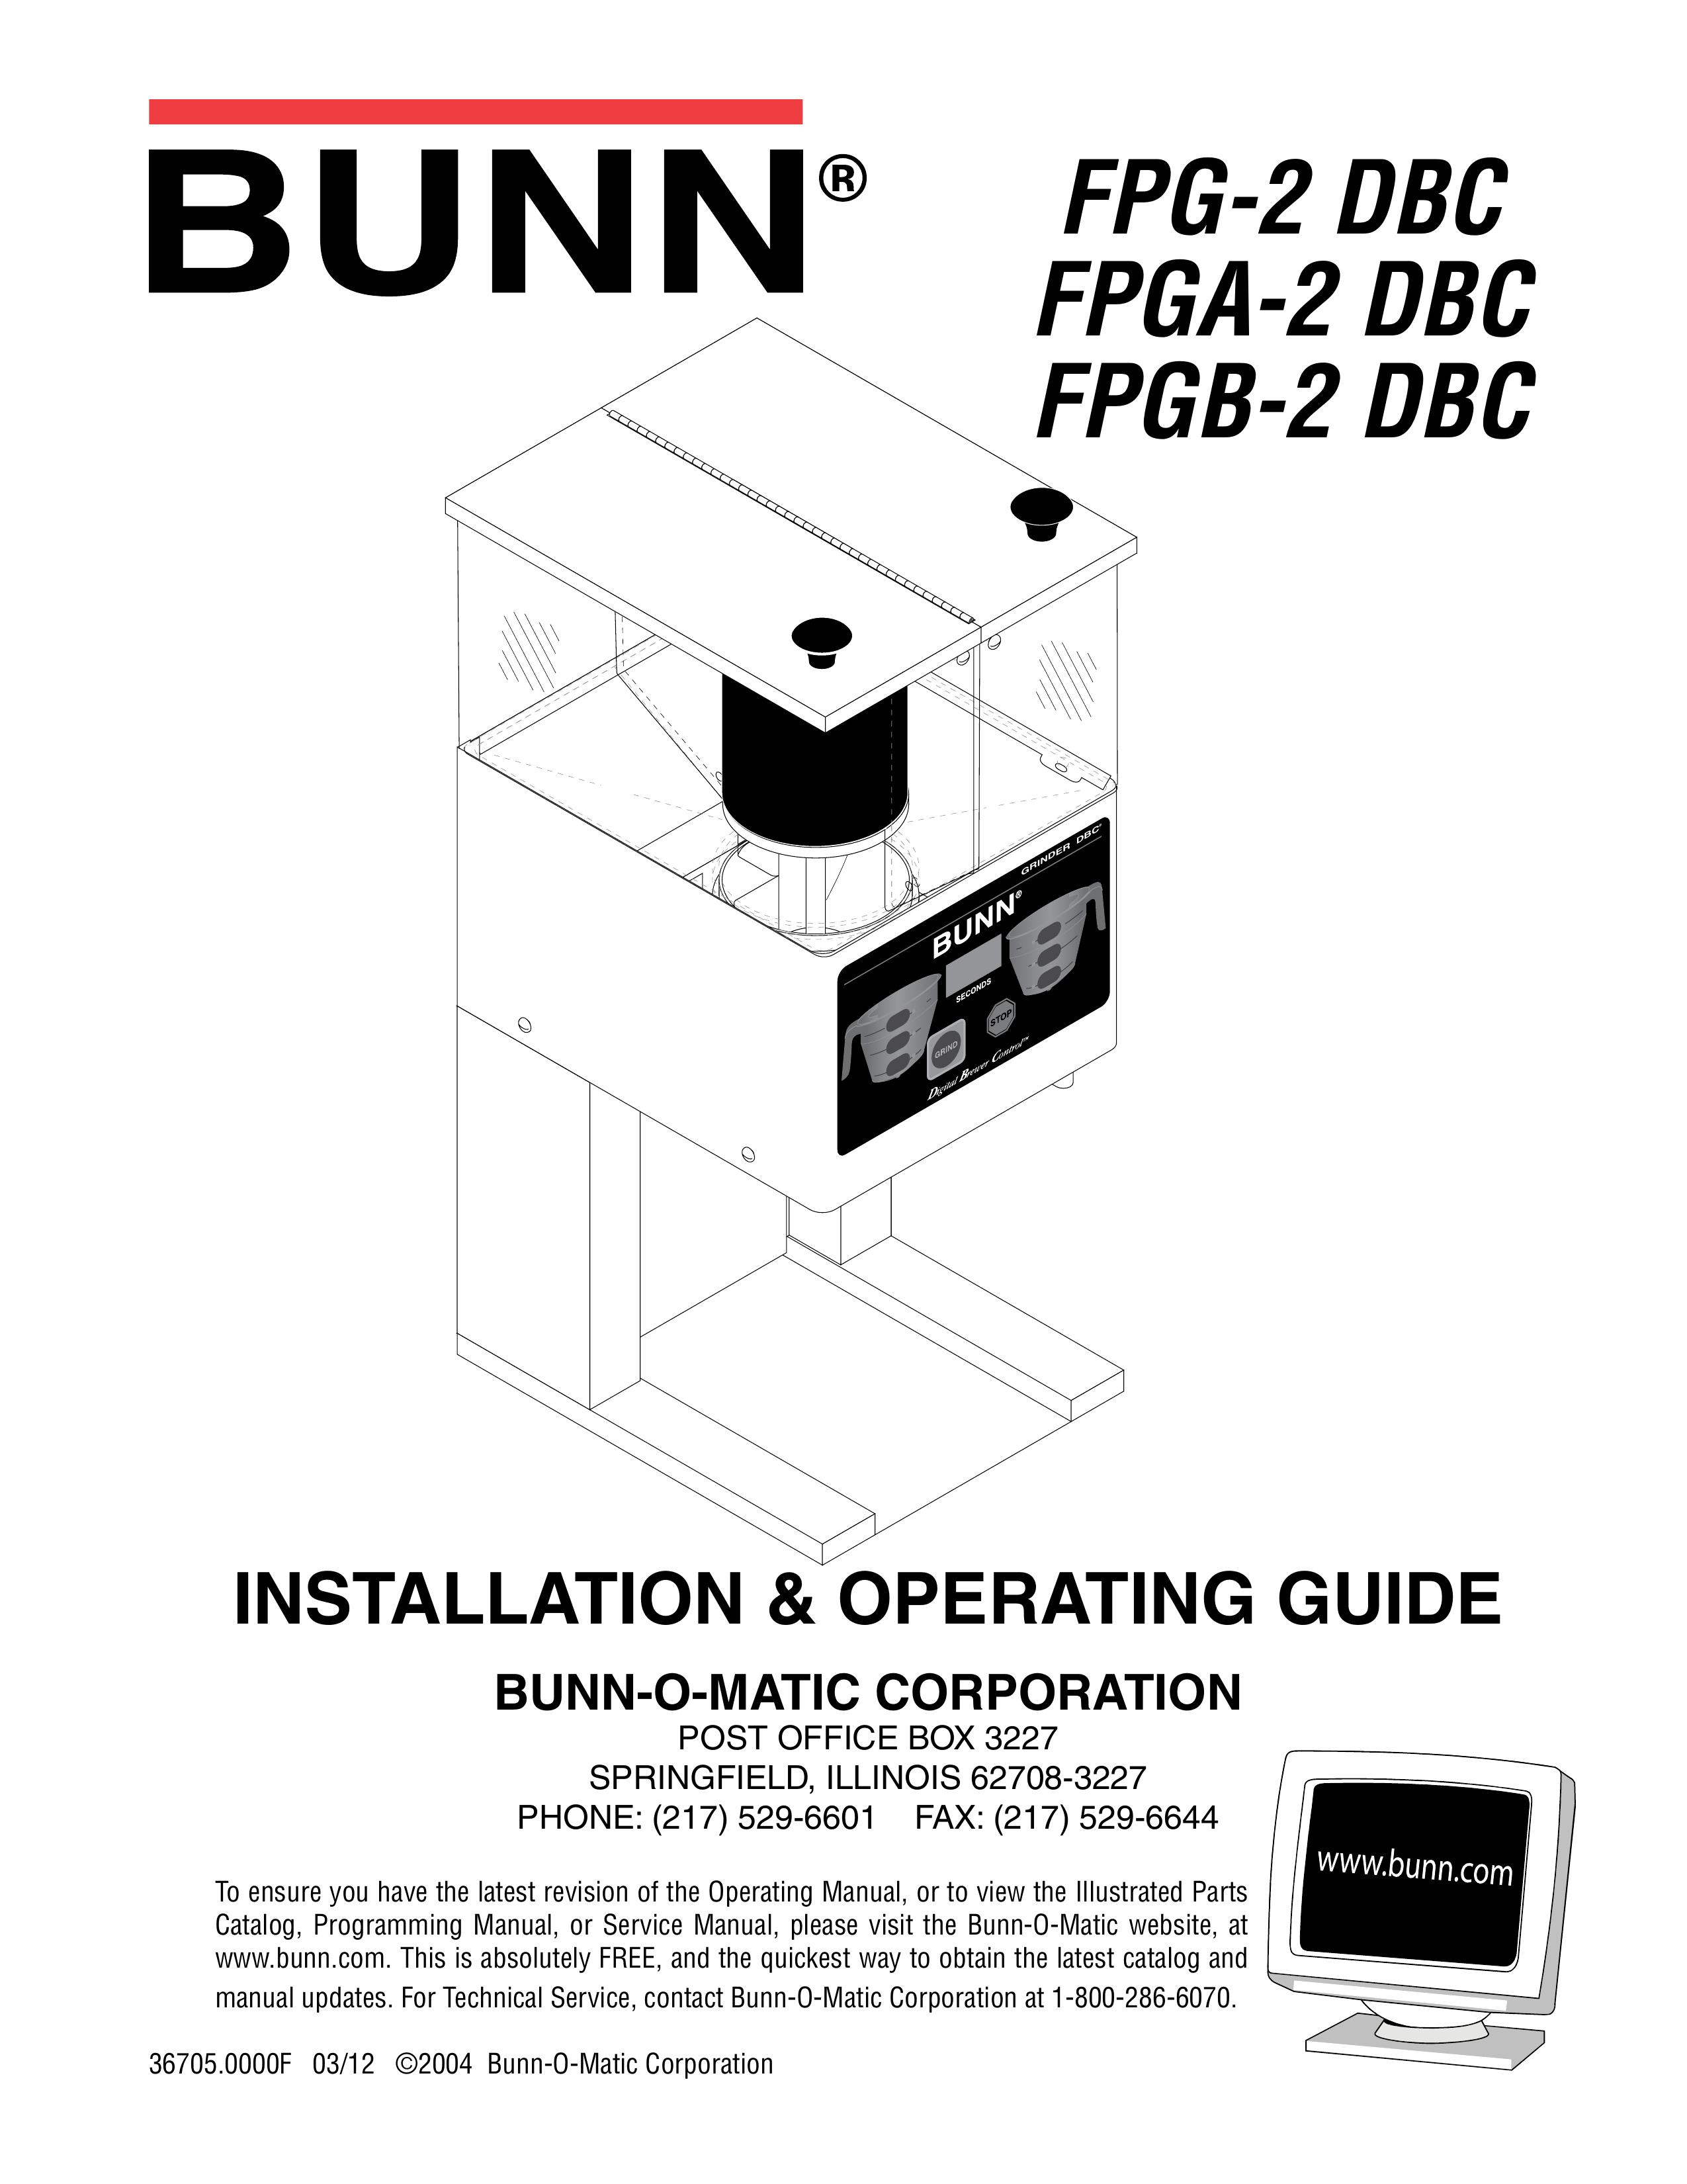 Bunn FPGA-2 DBC Water Dispenser User Manual